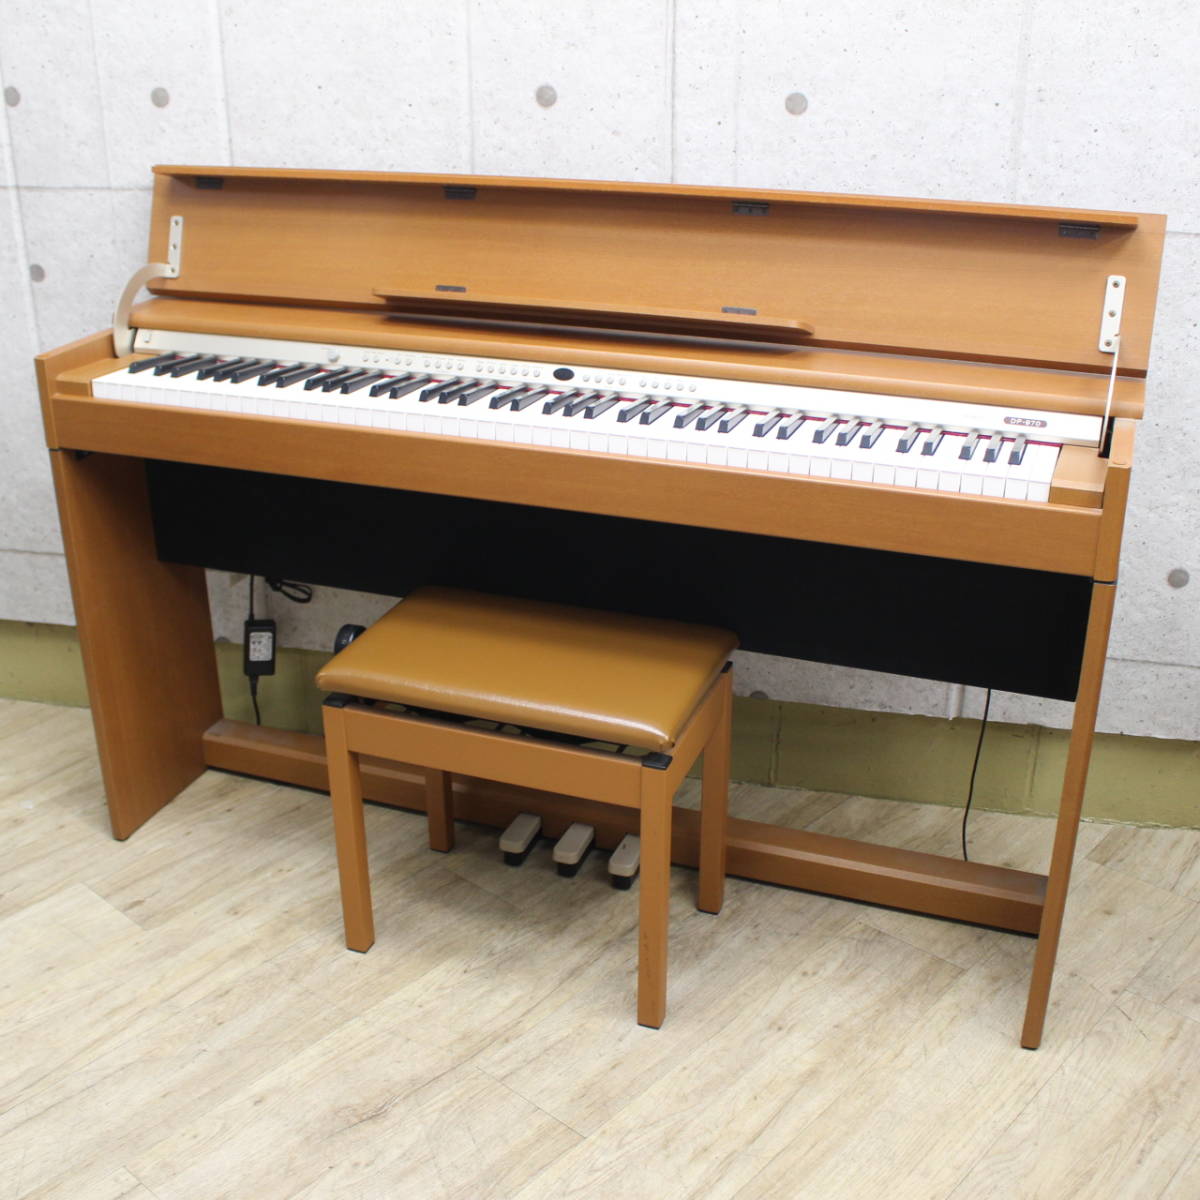 ROLAND(ローランド) 電子ピアノ DP-970 【トレファク草加店】 - 鍵盤 